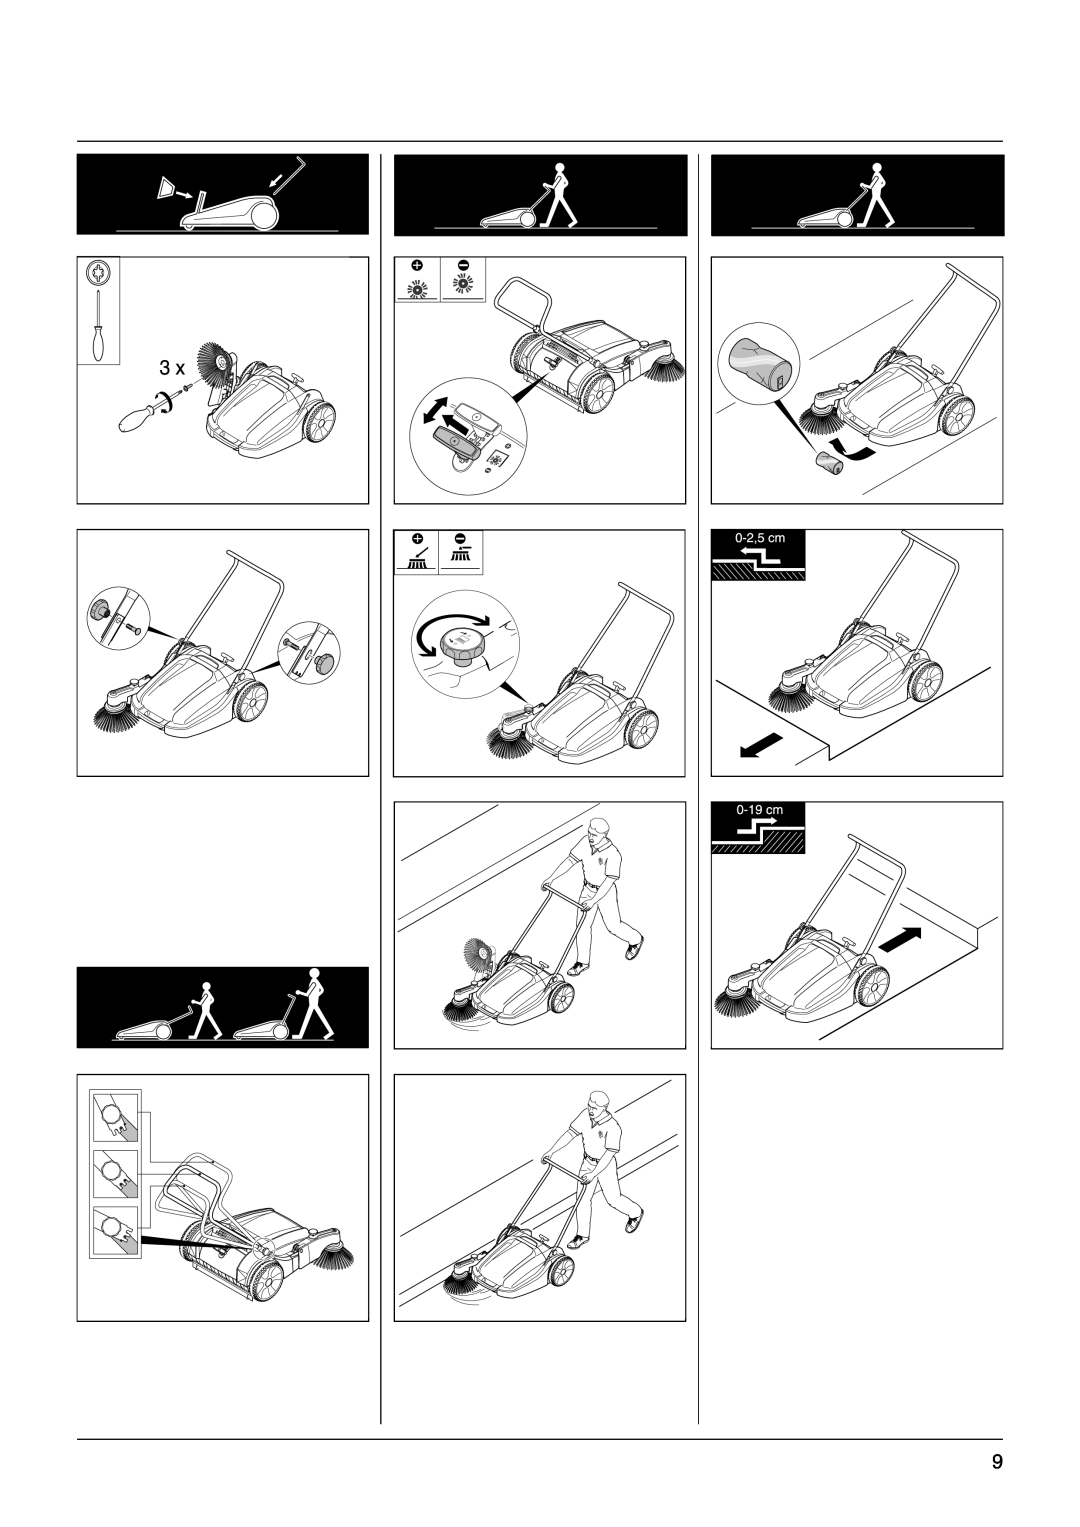 Windsor Sweepers manual 